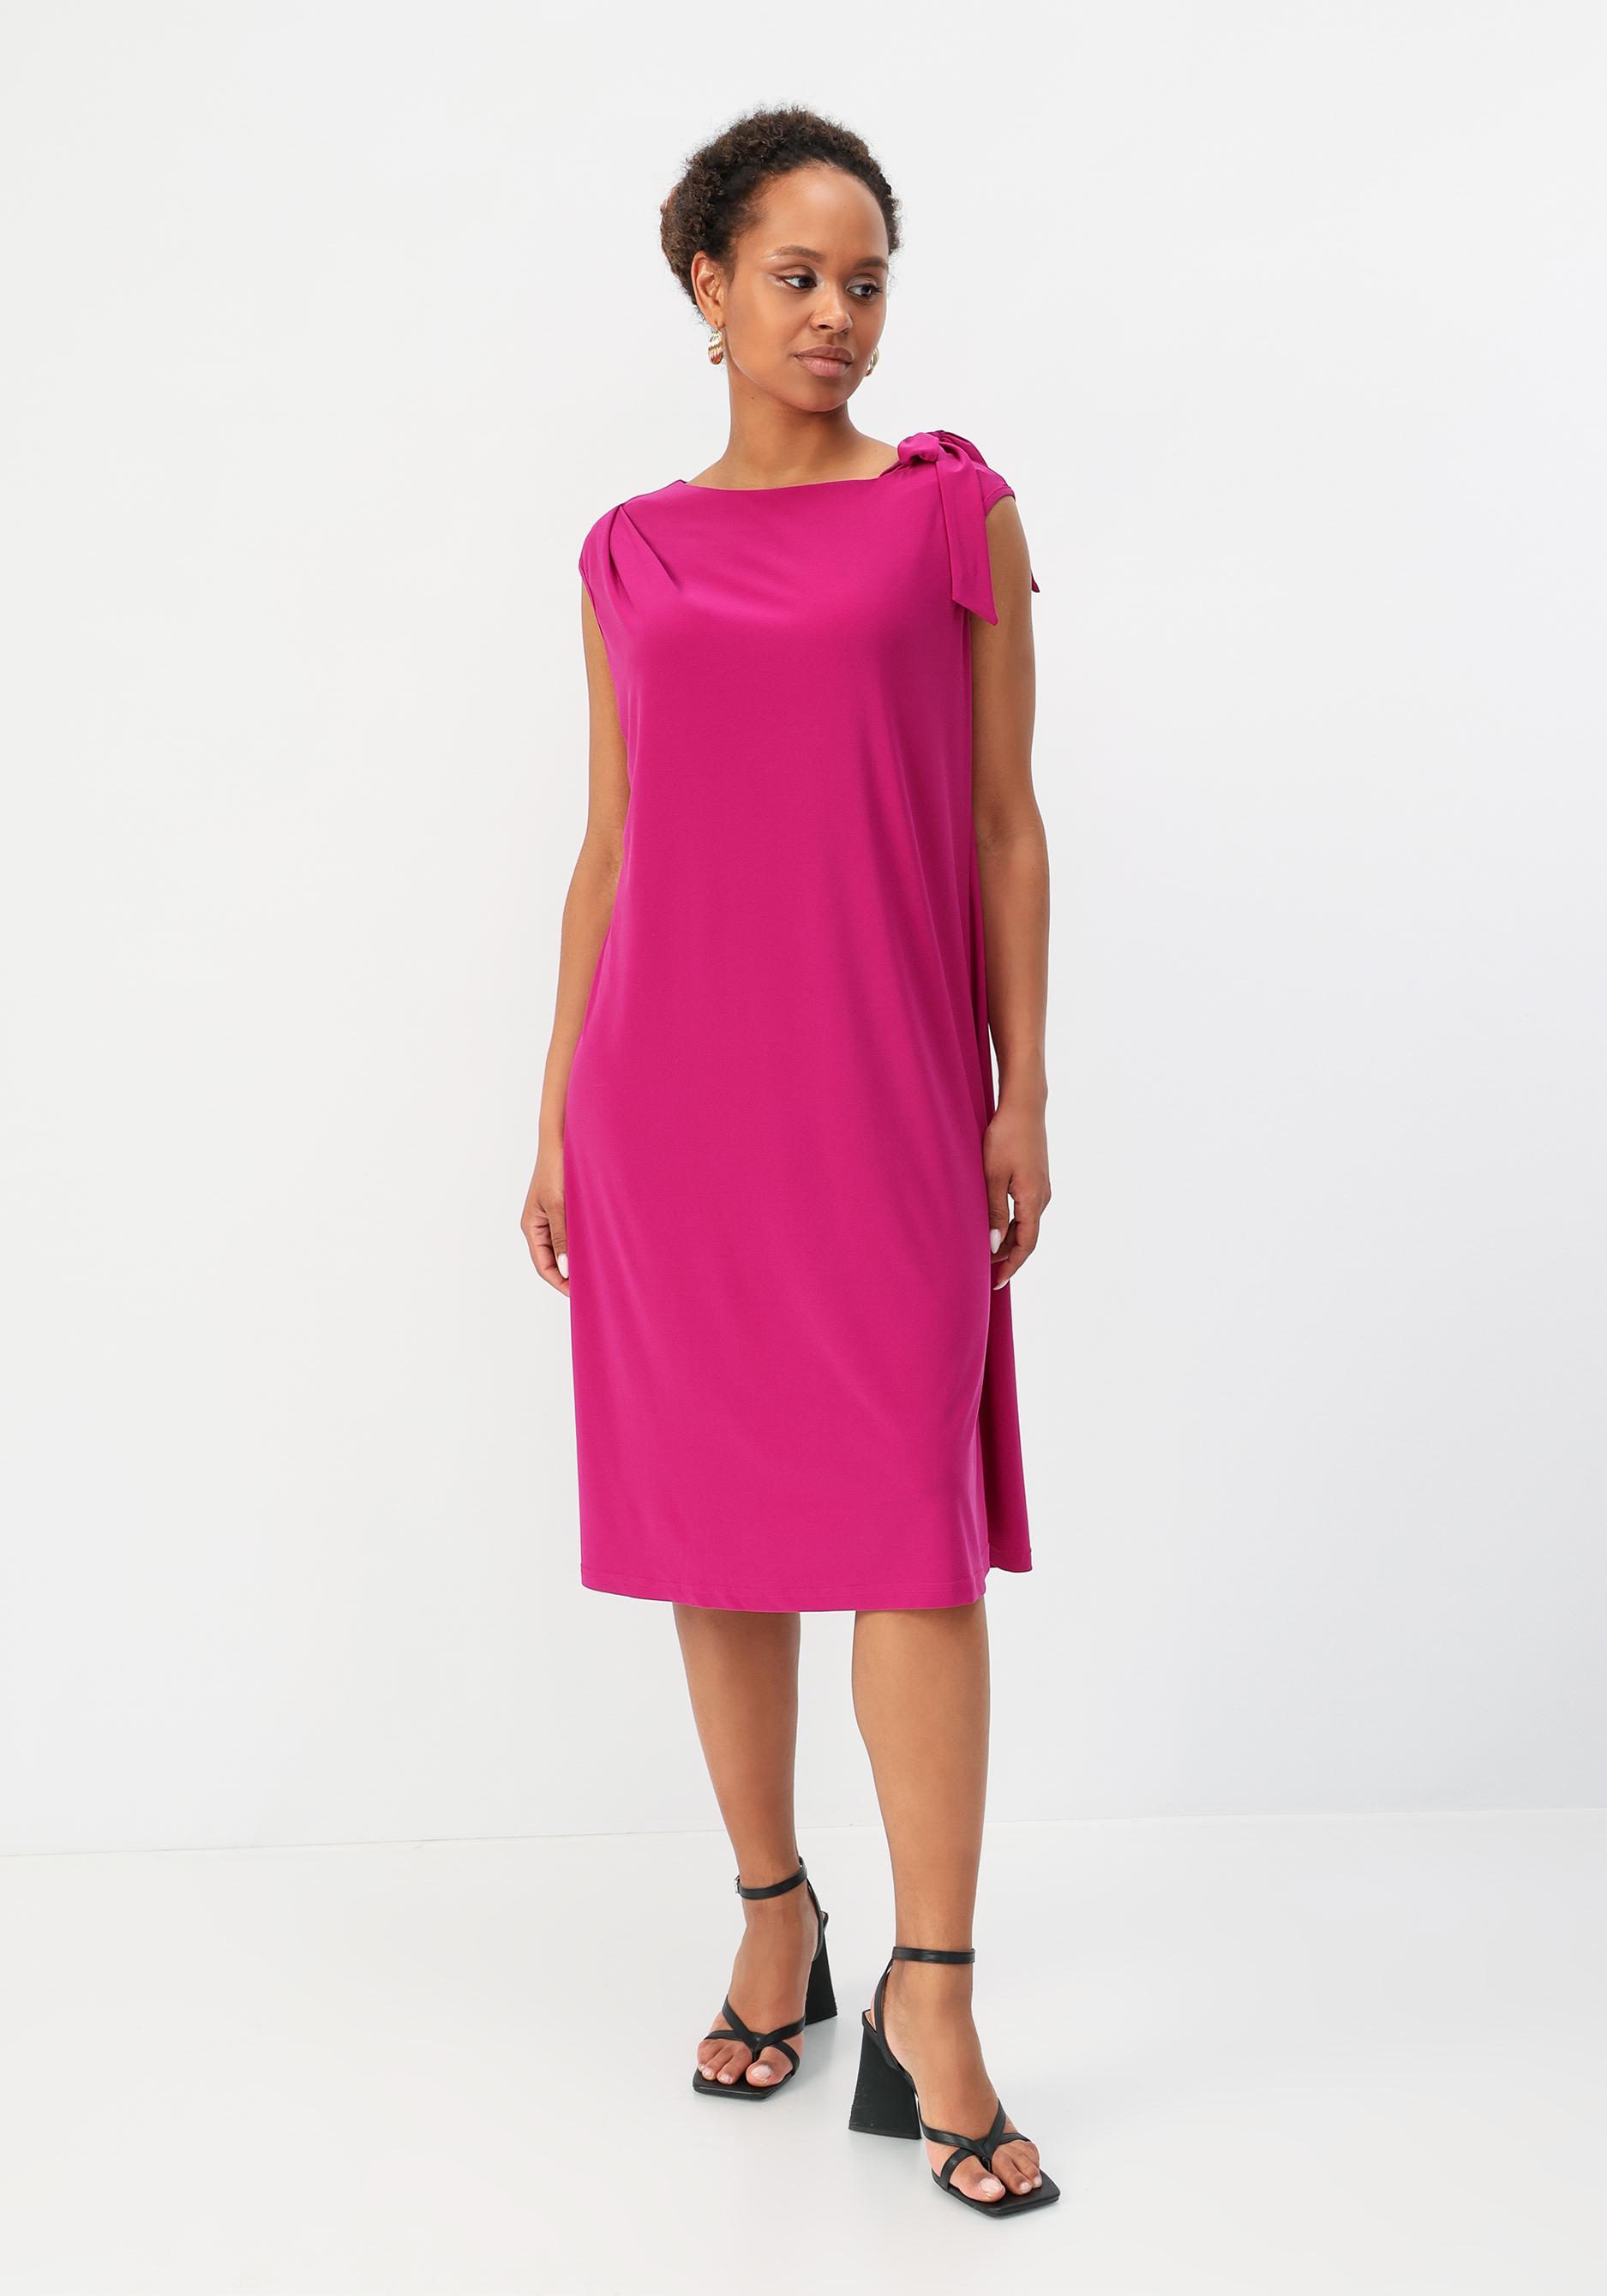 Платье "Марфа" СКС, цвет розовый, размер 48